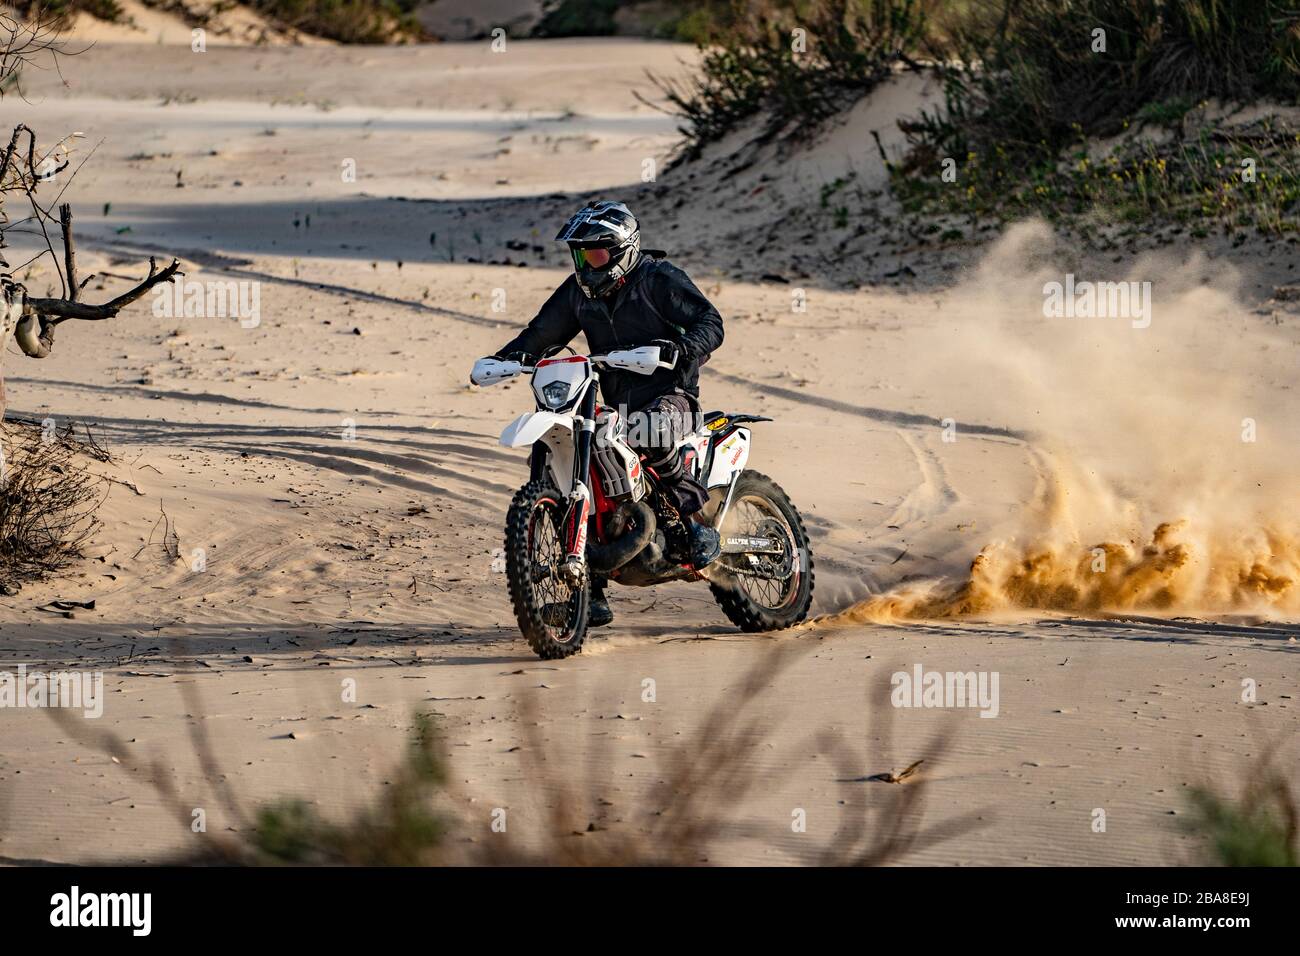 Carreras de motos de arena fotografías e imágenes de alta resolución - Alamy